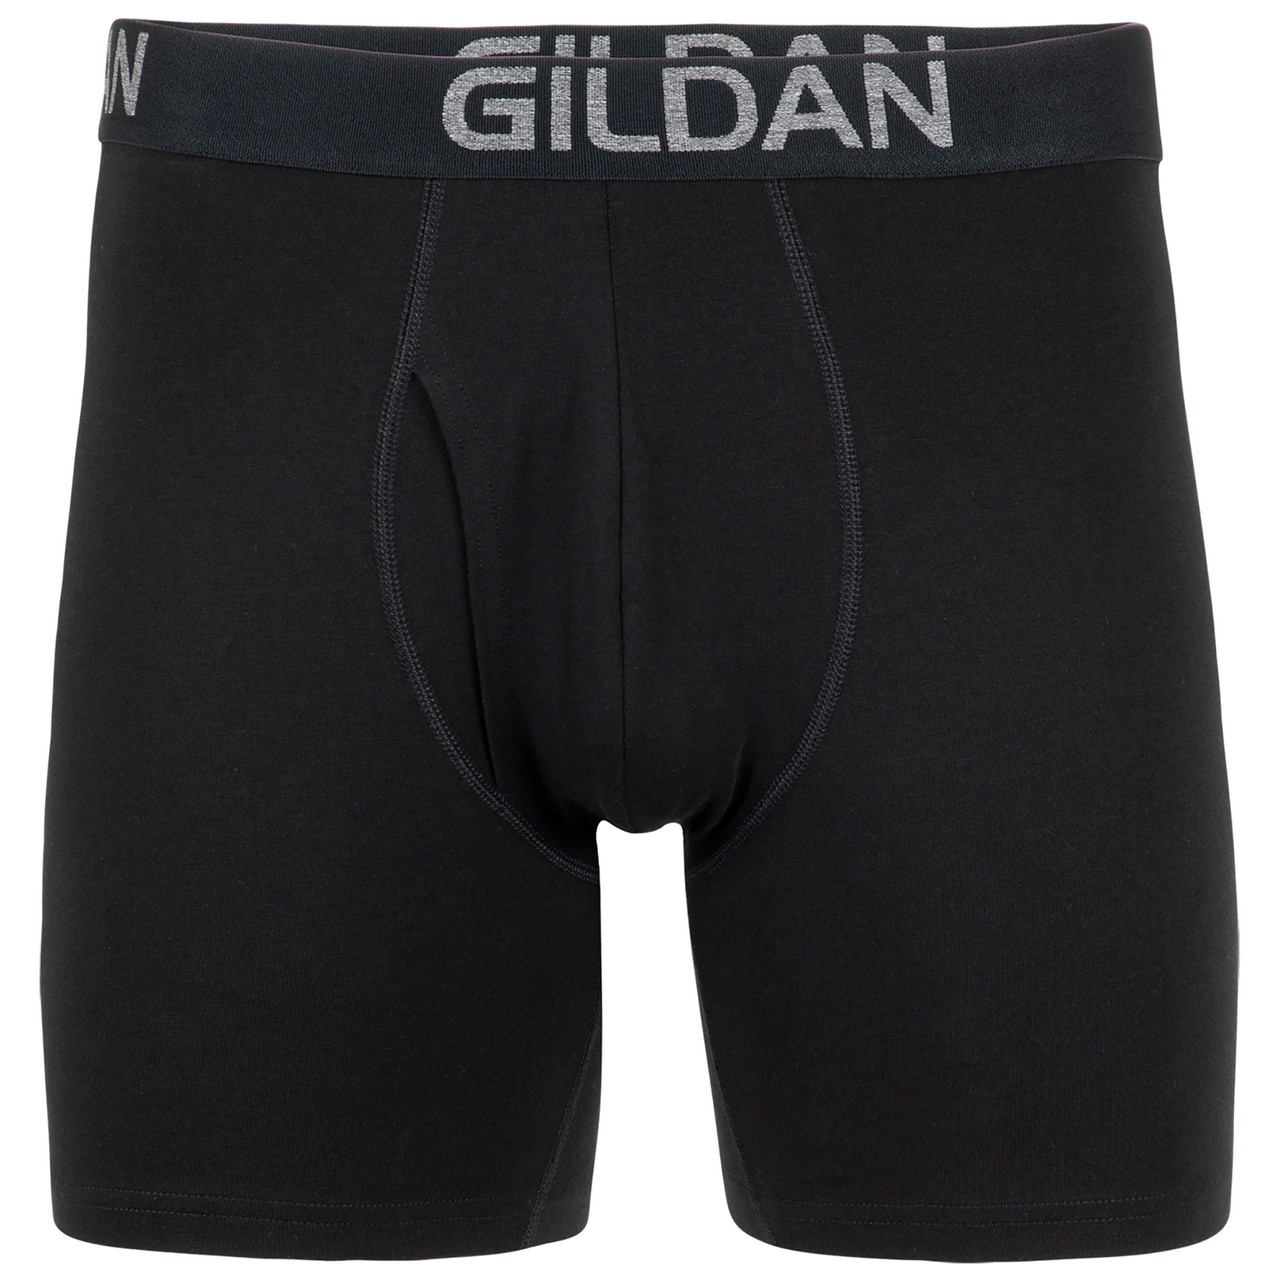 Gildan Men's Boxer Briefs, 3-Pack